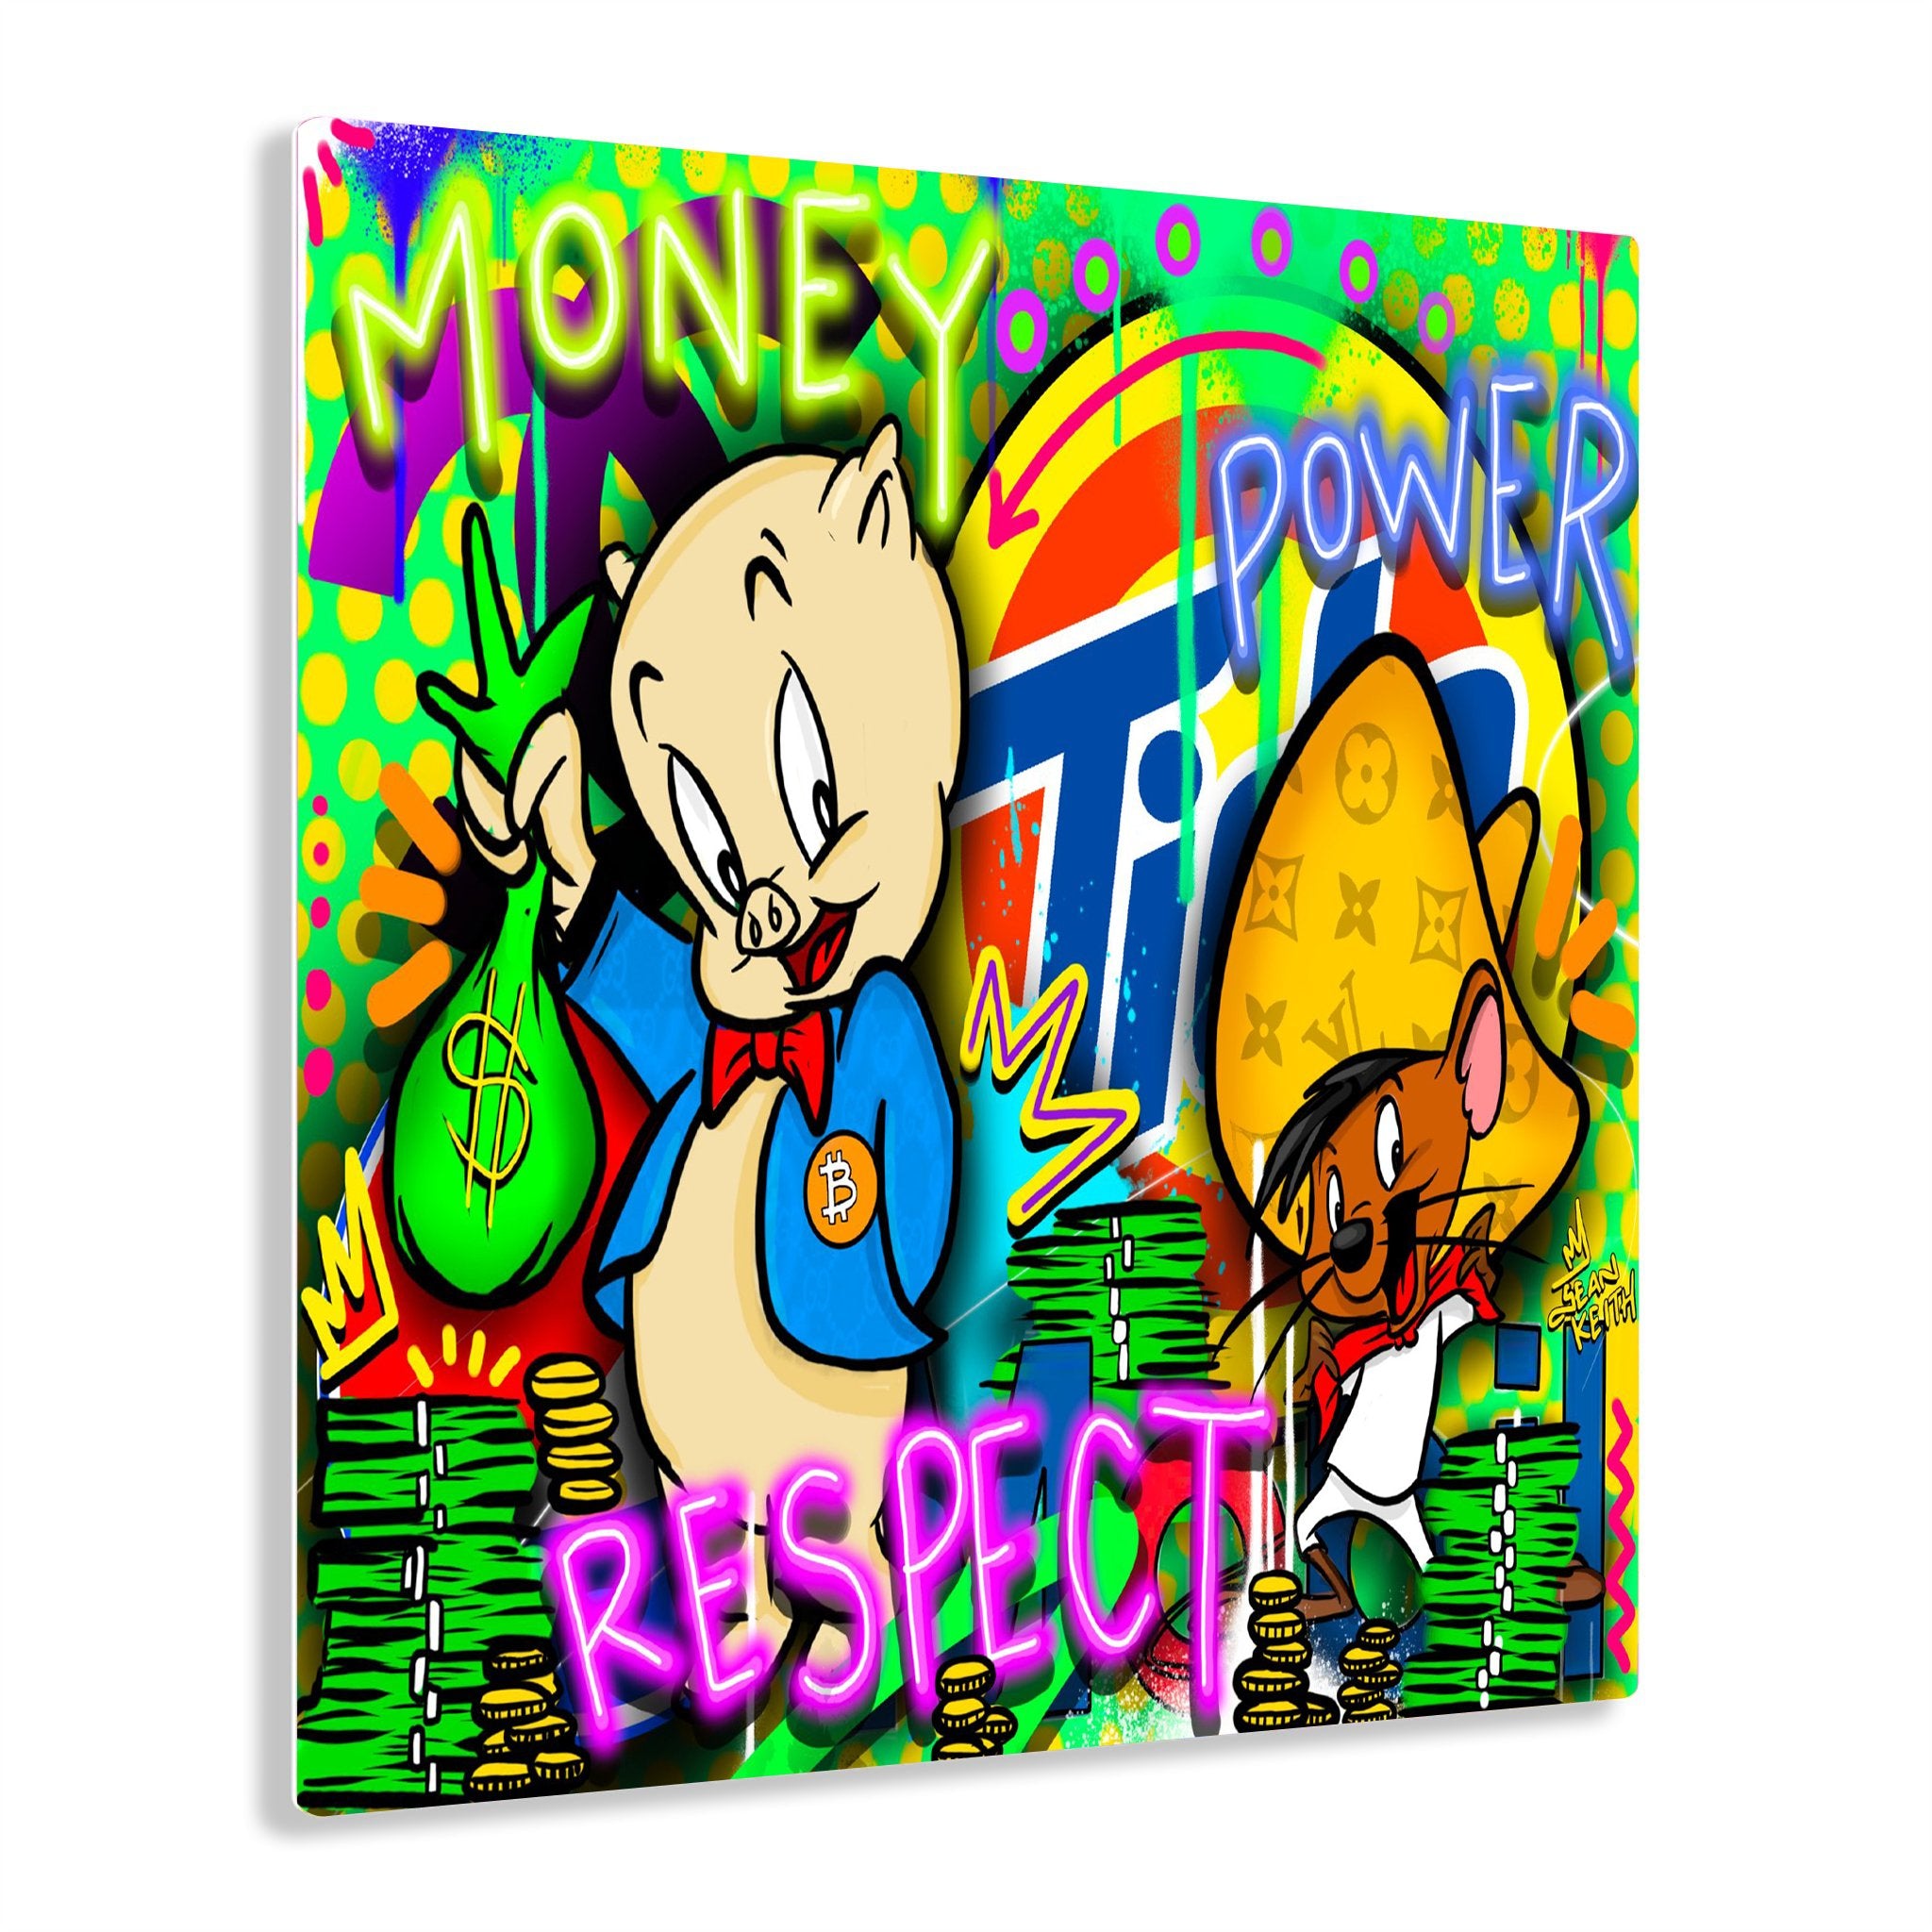 Money Power Respect print - Sean Keith Art